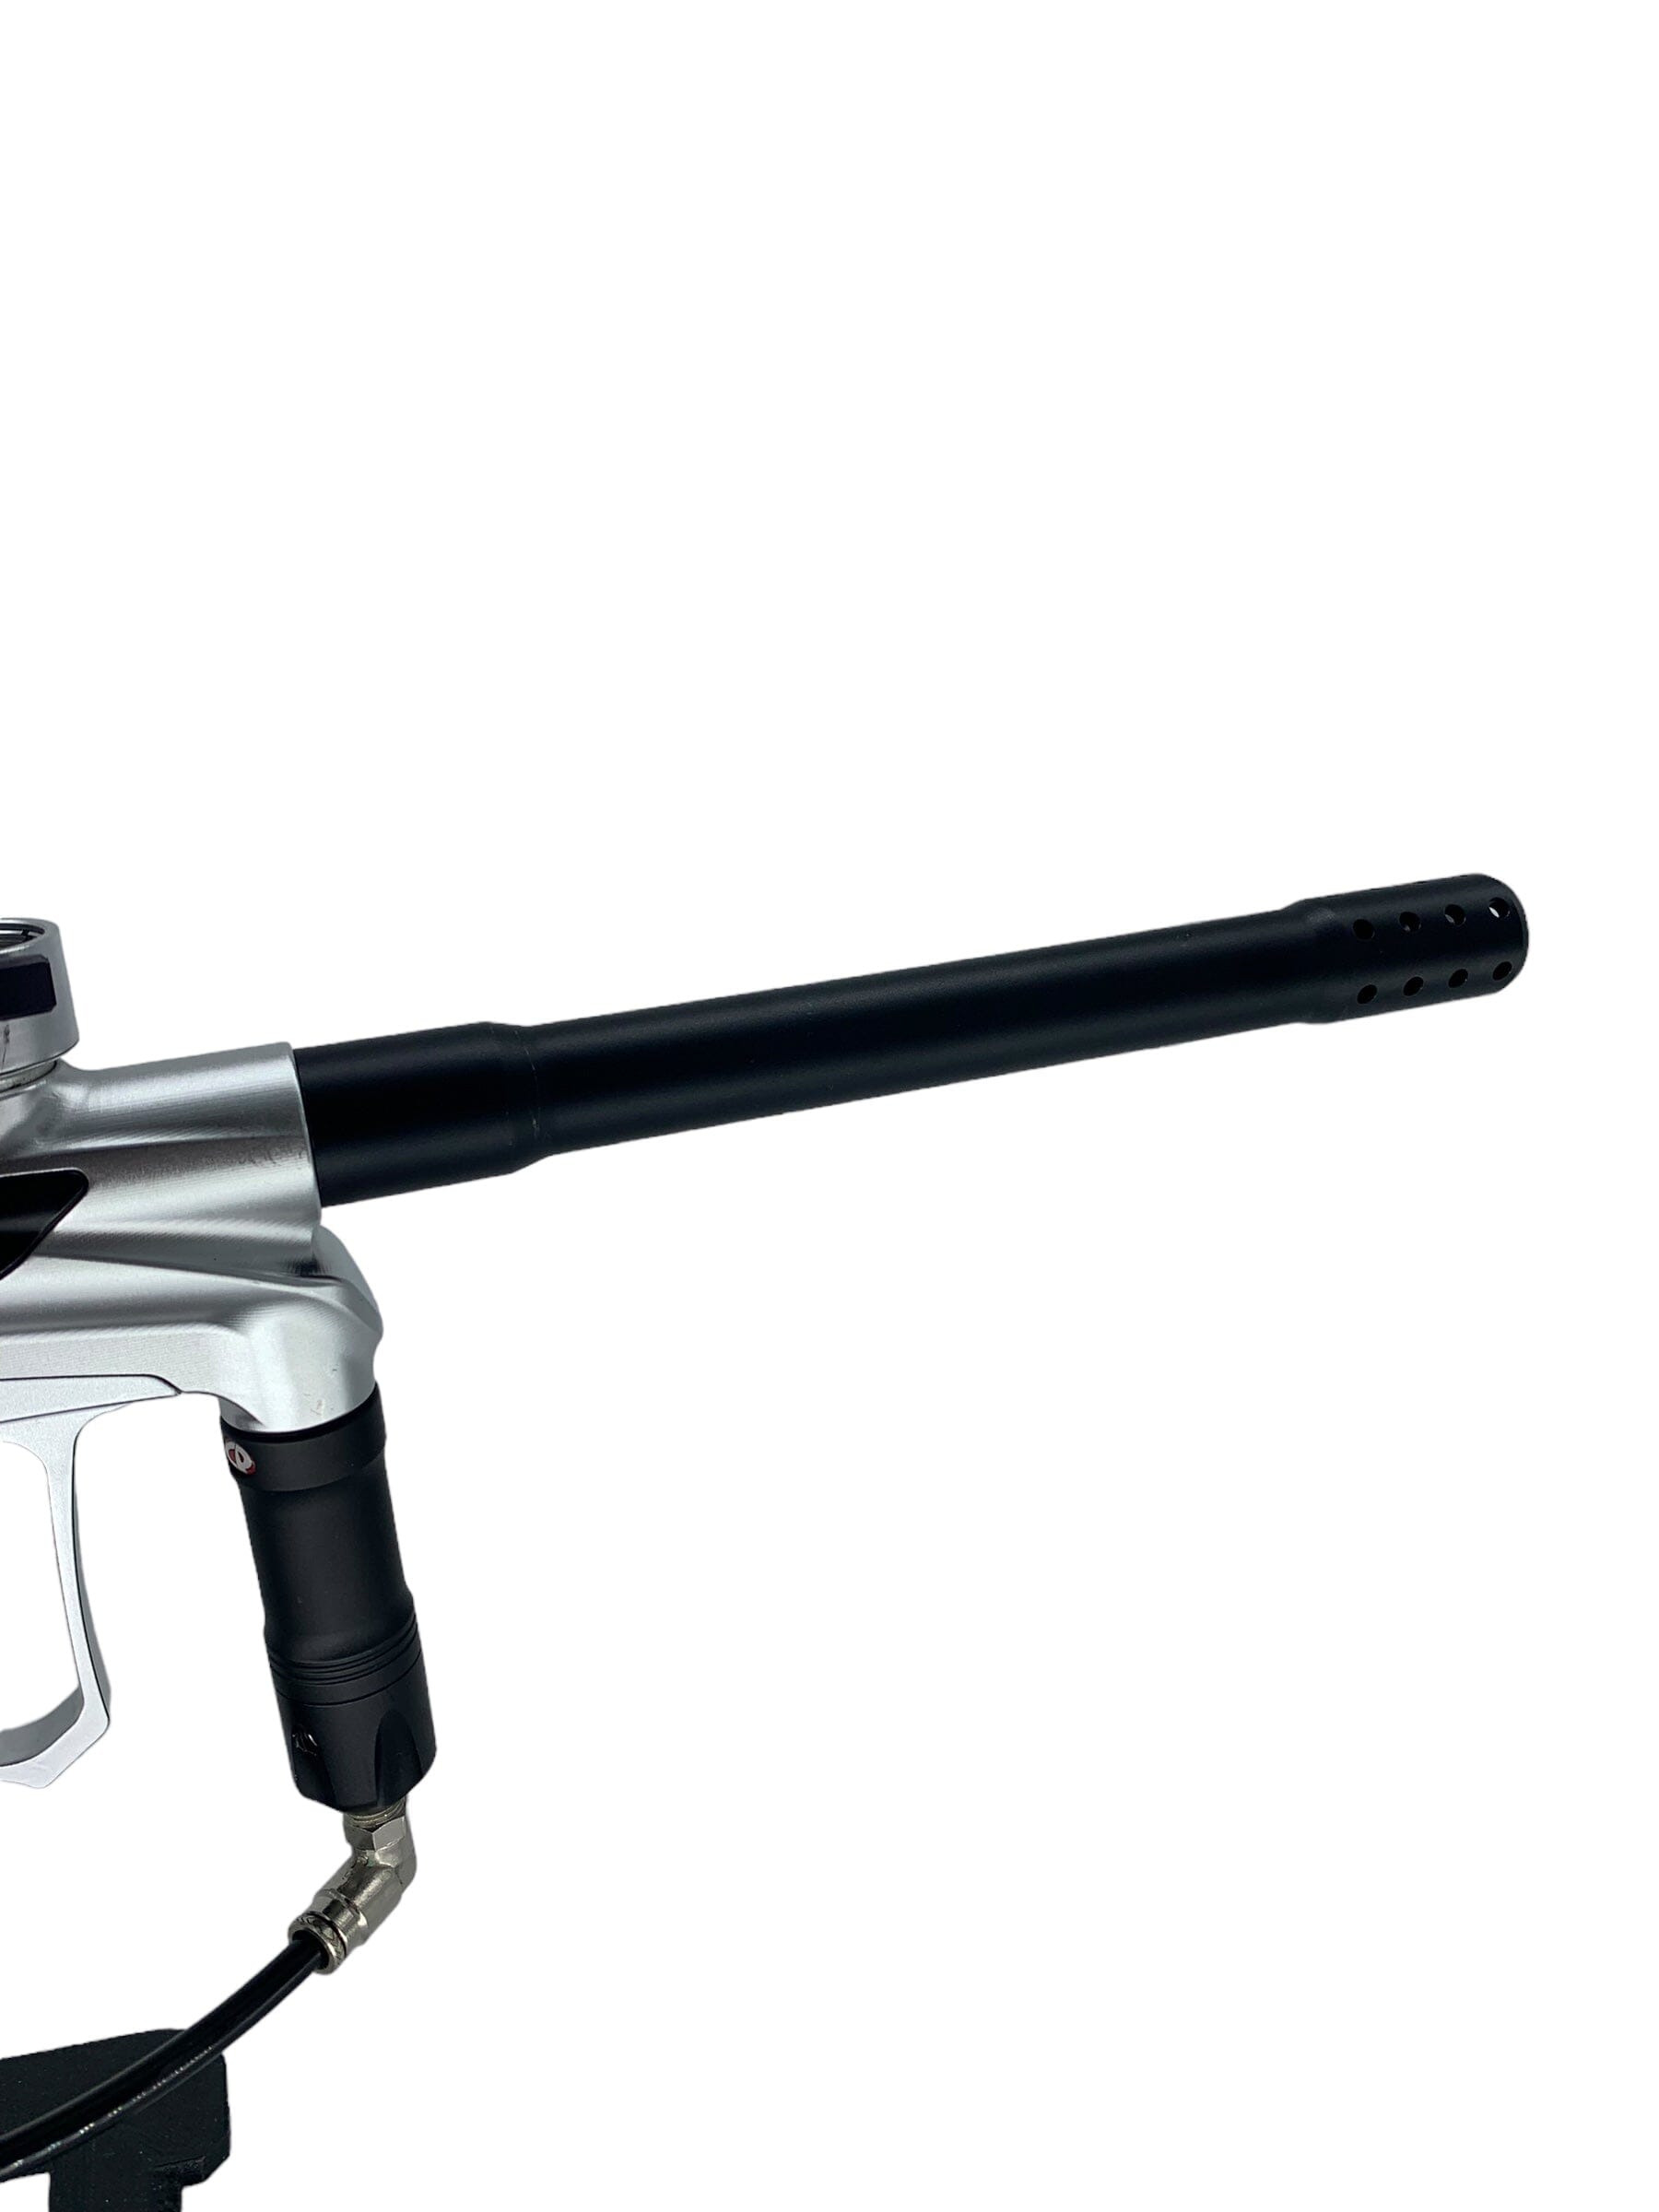 Used Dangerous Power G4 Paintball Gun Paintball Gun from CPXBrosPaintball Buy/Sell/Trade Paintball Markers, New Paintball Guns, Paintball Hoppers, Paintball Masks, and Hormesis Headbands